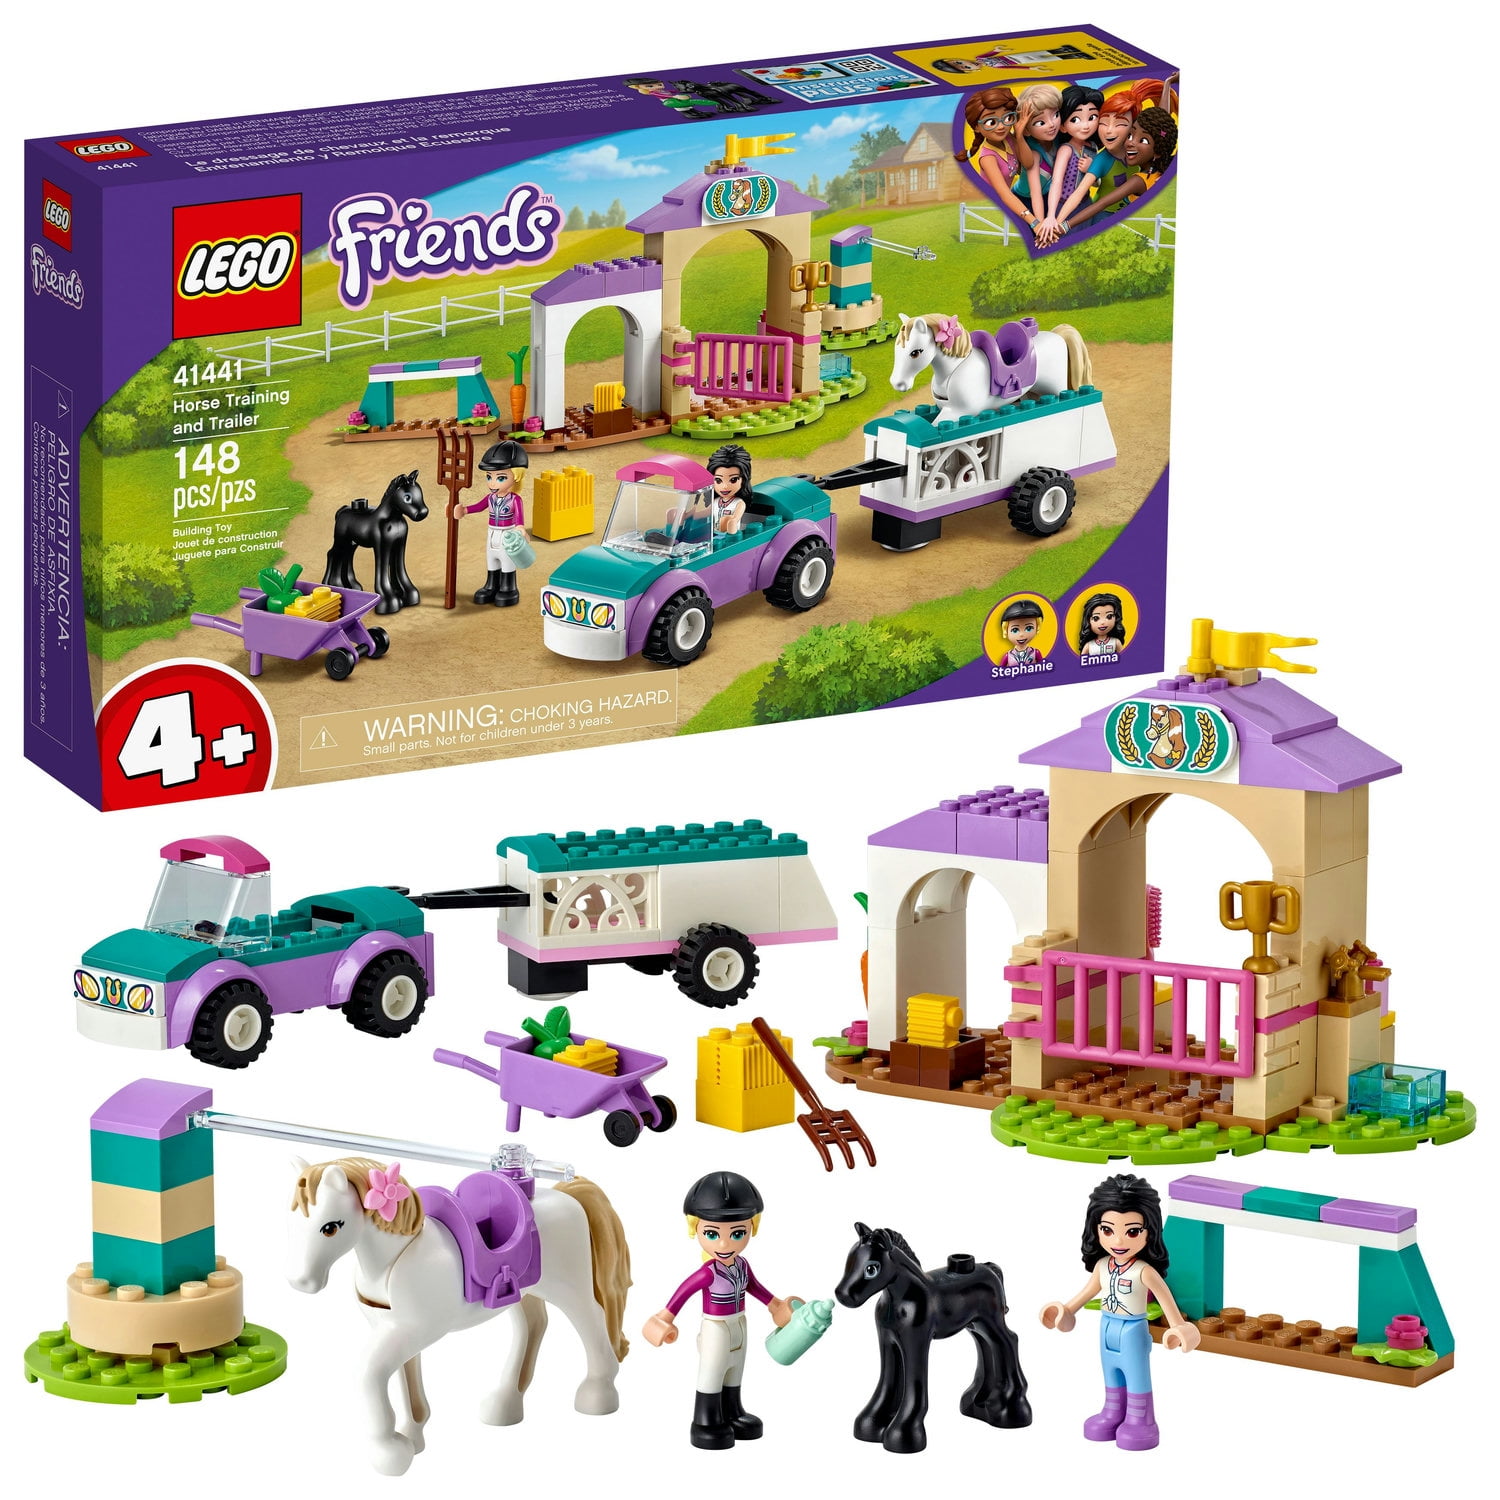 Friends Horse Training and Trailer 41441 Building Toy; With LEGO Stephanie Emma (148 Pieces) - Walmart.com